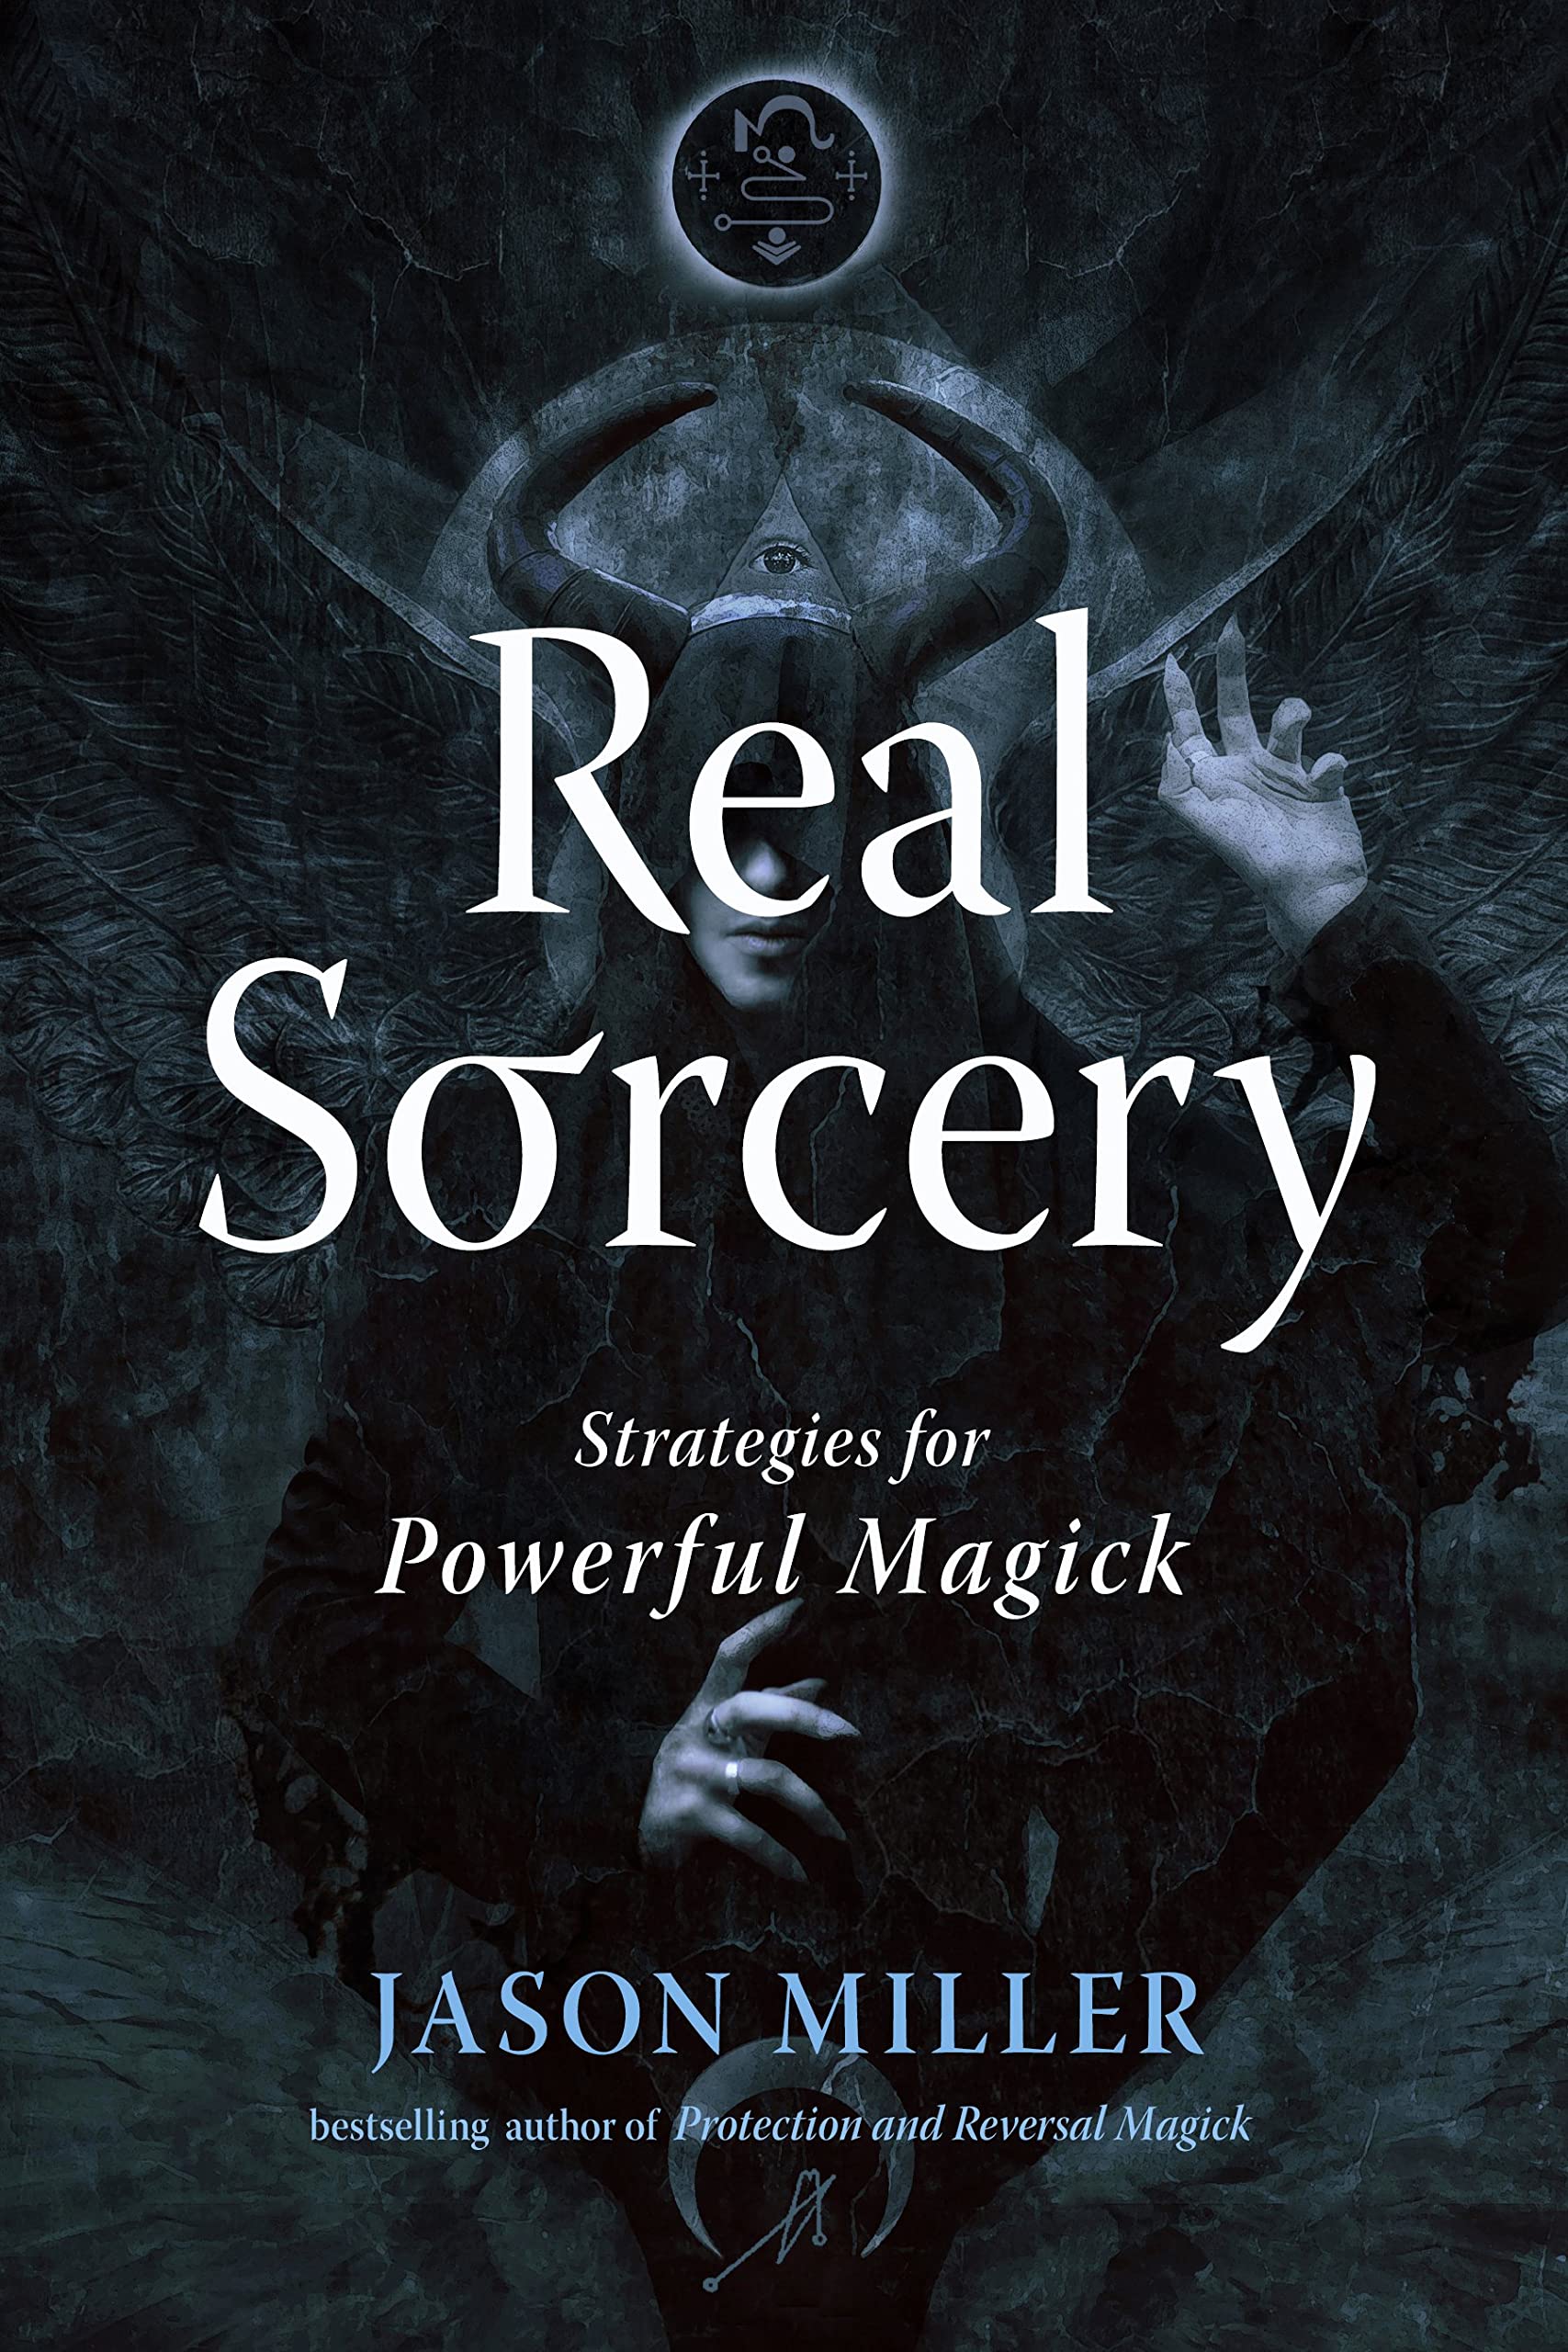 Real Sorcery